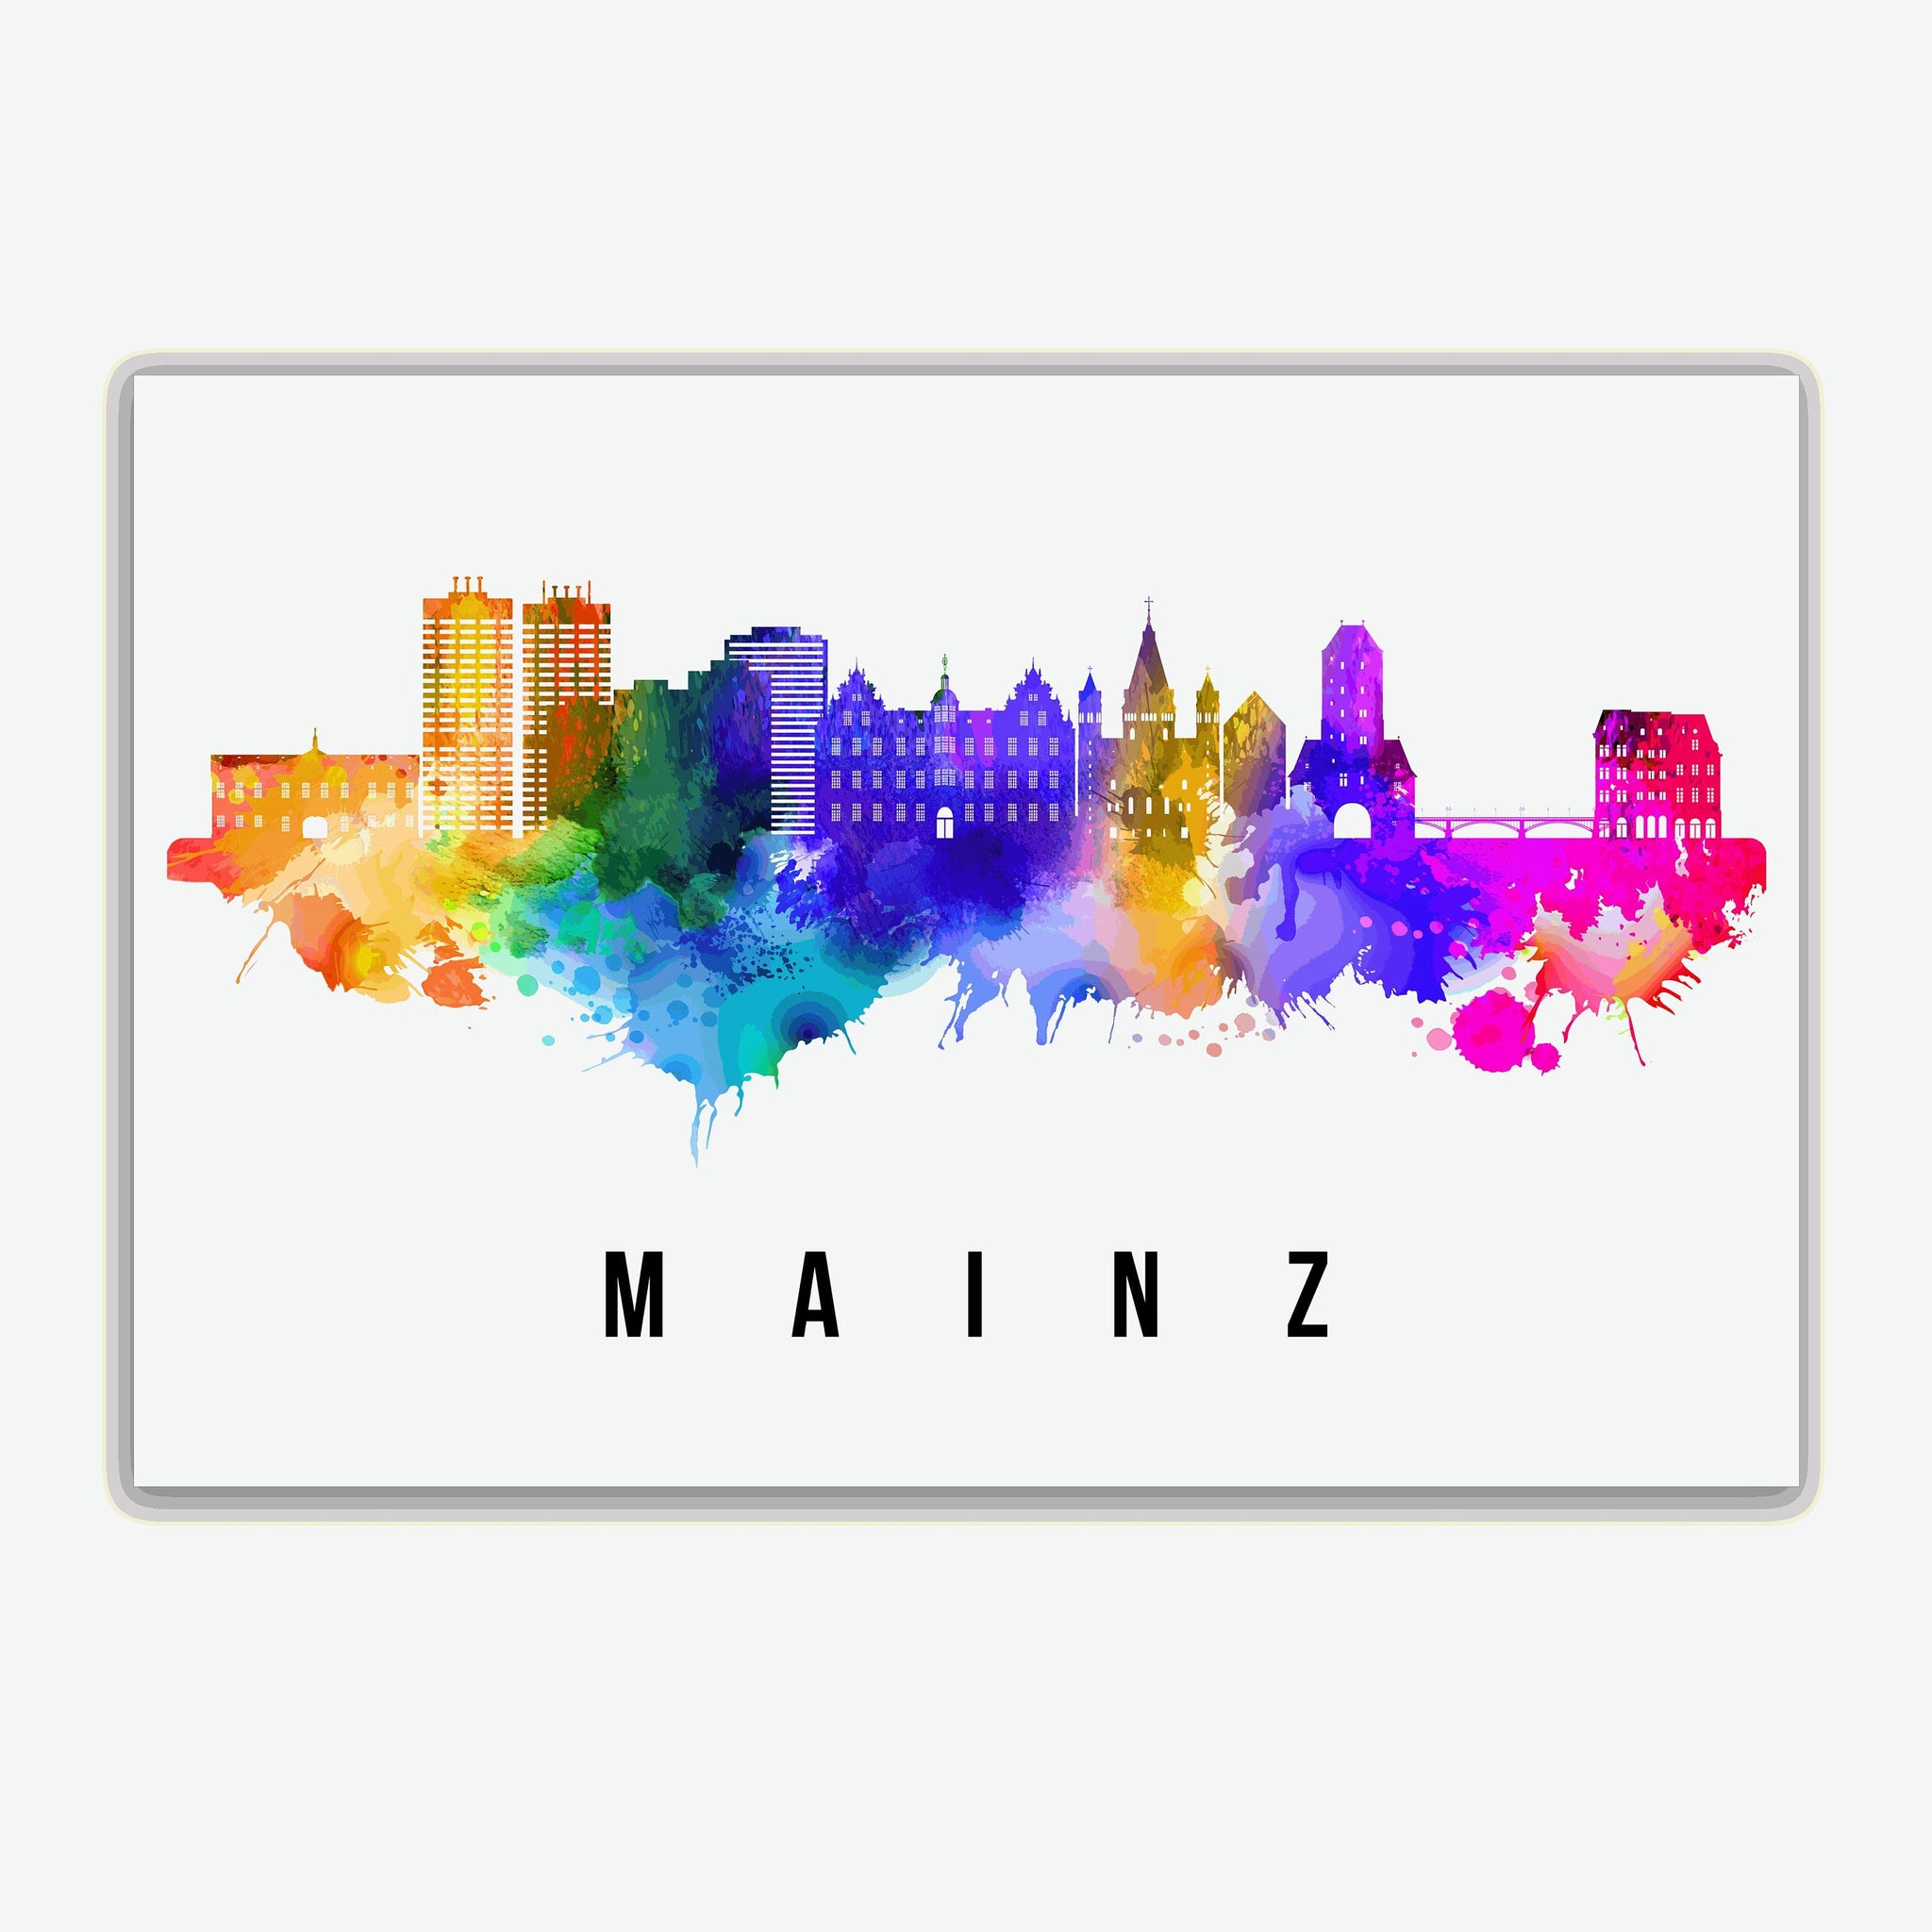 MAINZ - GERMANY Poster, Skyline Poster Cityscape and Landmark Mainz Illustration Home Wall Art, Office Decor